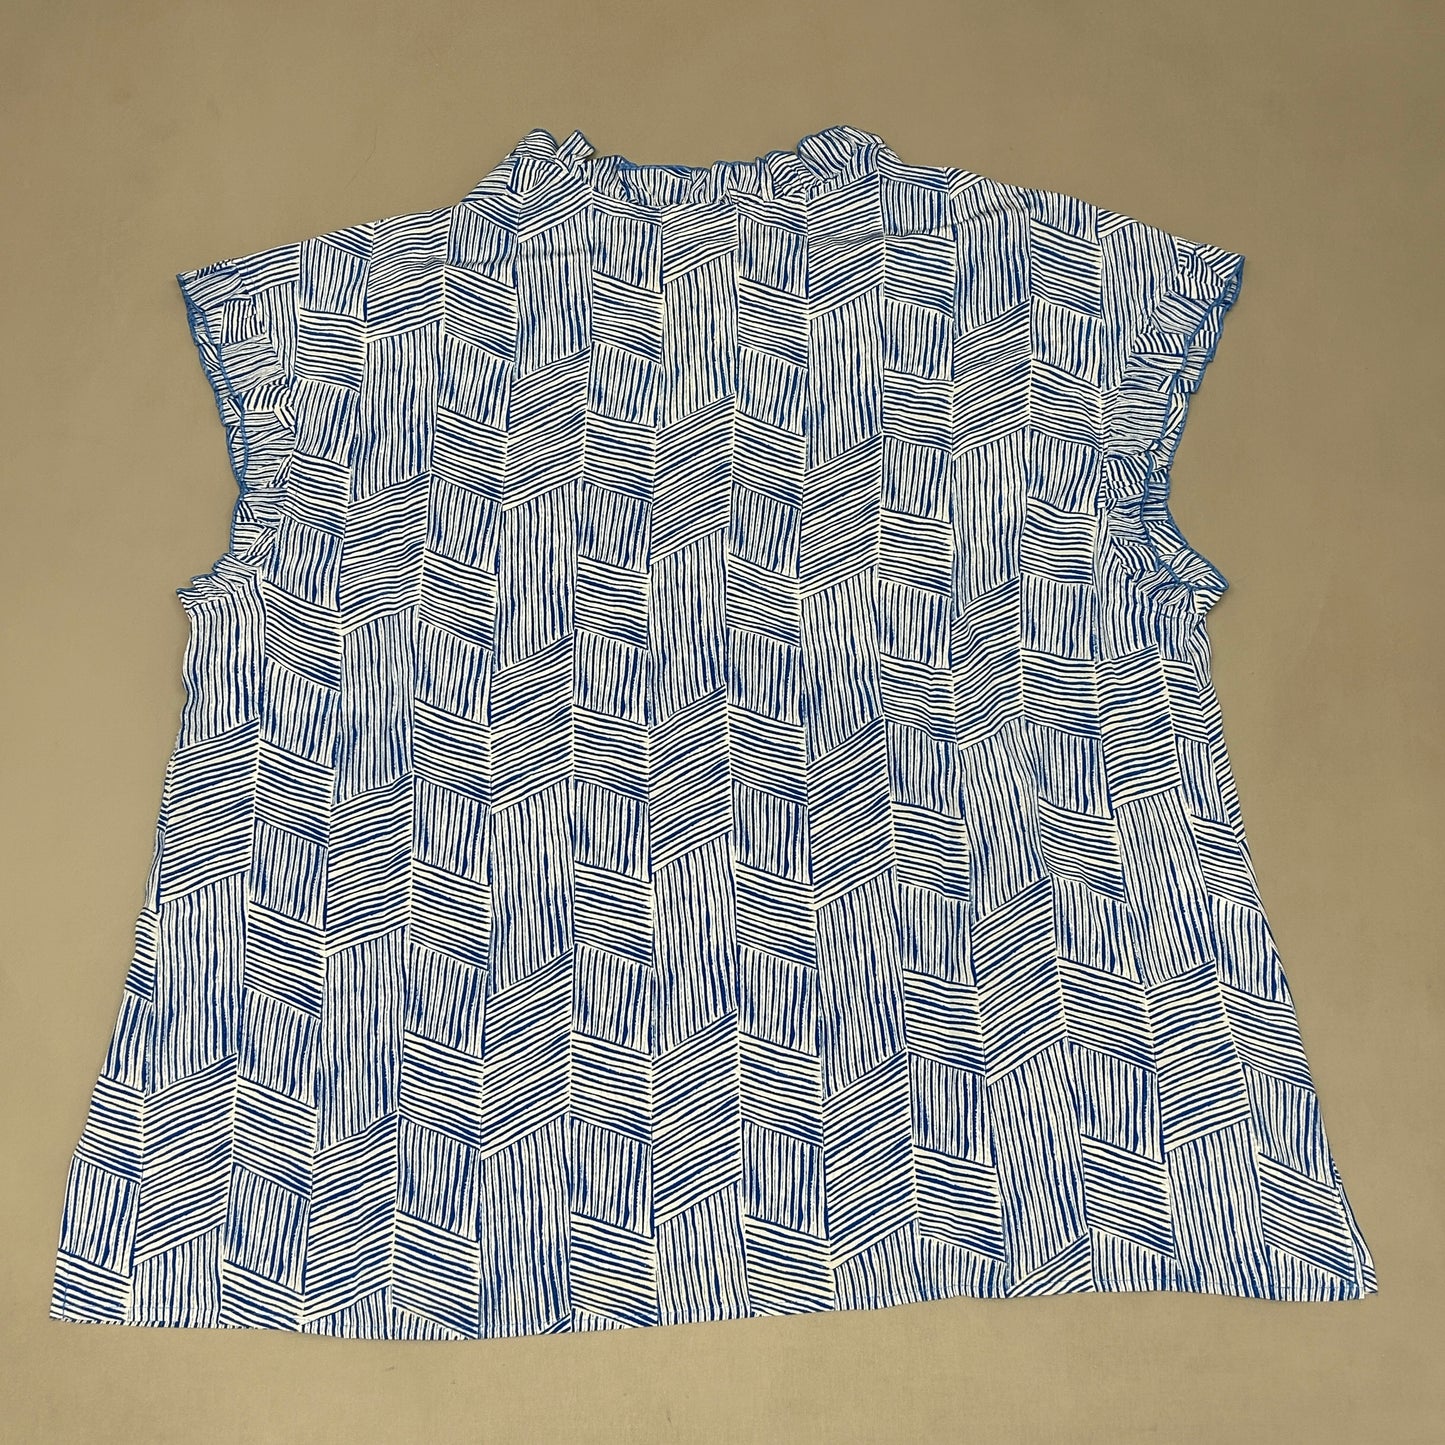 TOMMY BAHAMA Women's Harbor Island Ruffle Top Short Sleeve Silk Blue/White Size M (New)